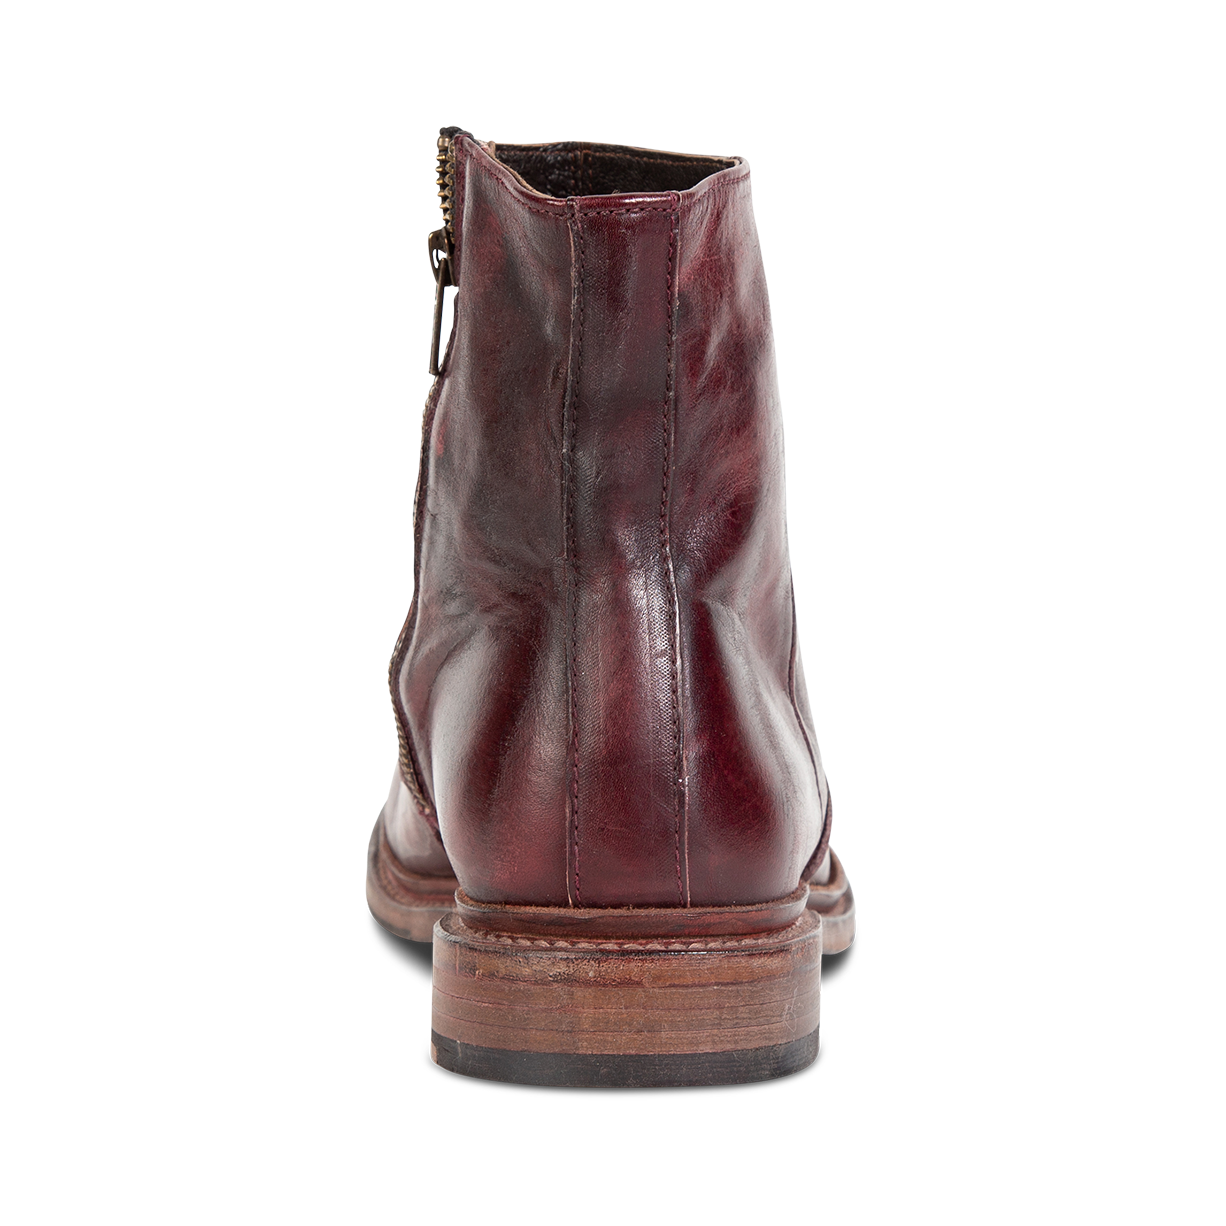 Back view showing low heel on FREEBIRD men's Douglas wine ankle boot